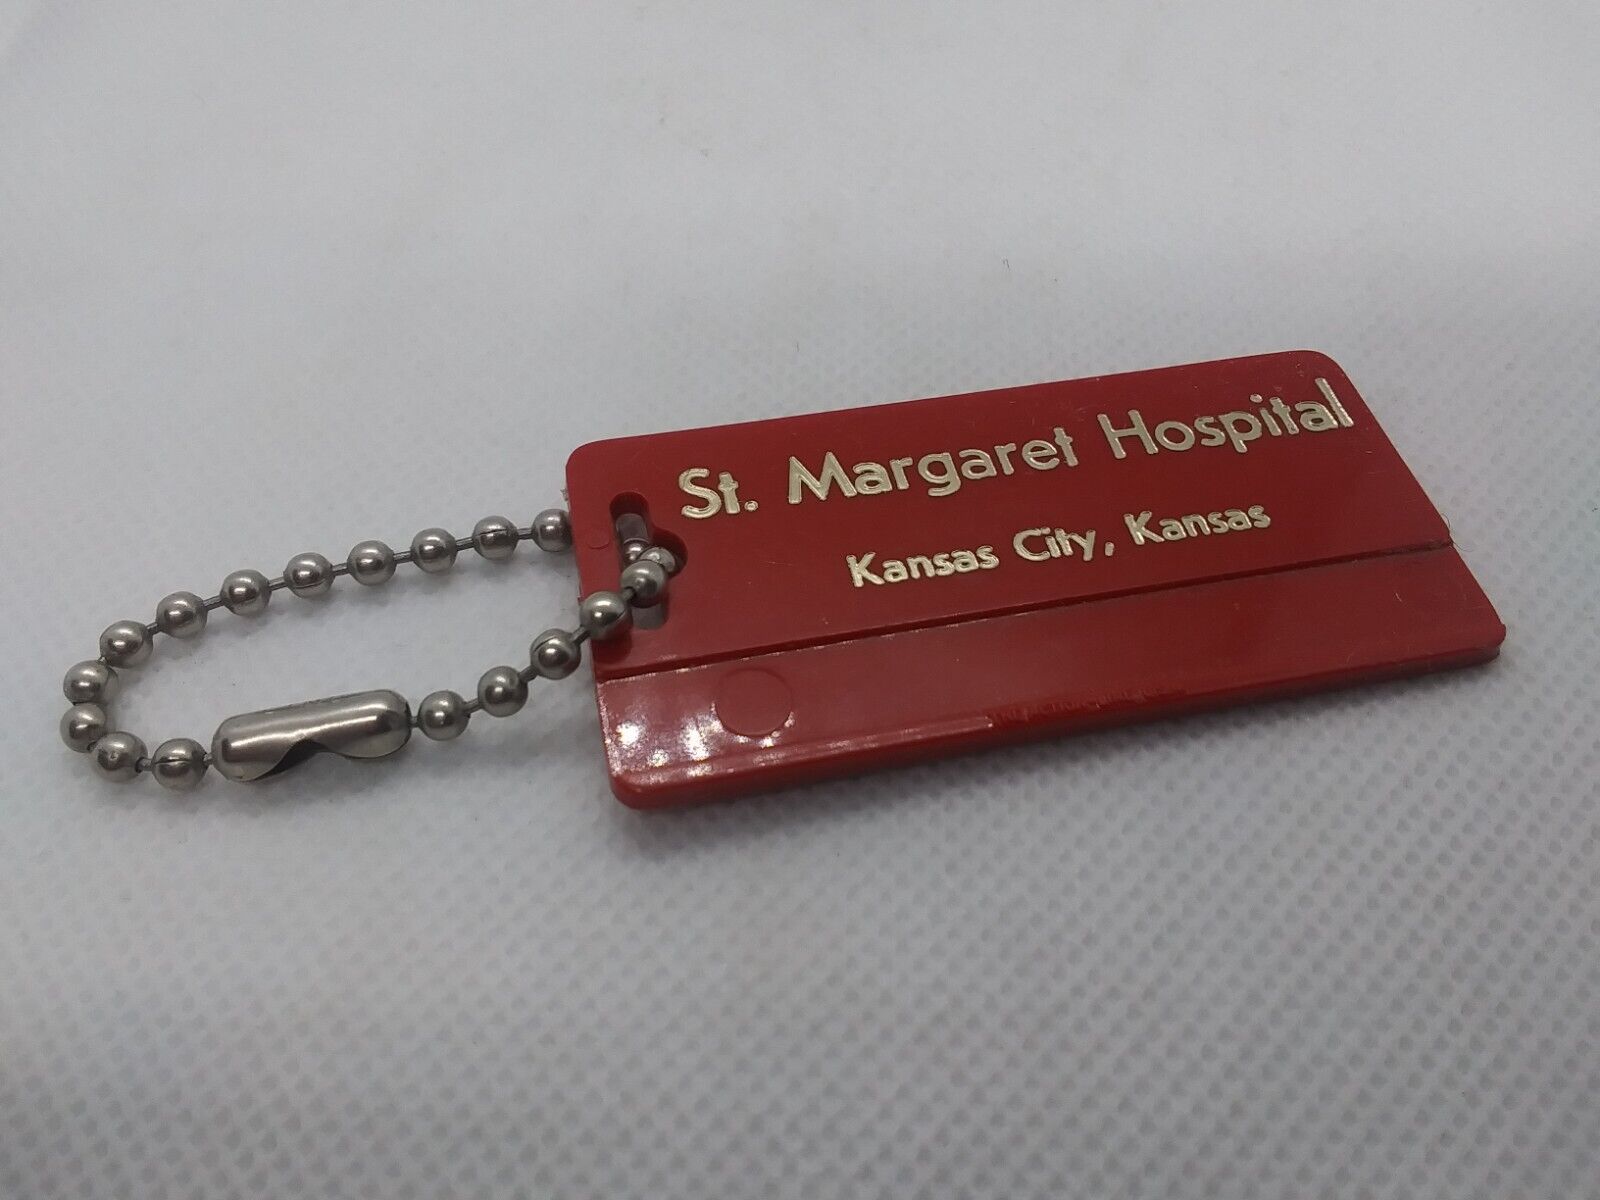 Vintage St. Margaret Hospital Kansas City Kansas keychain